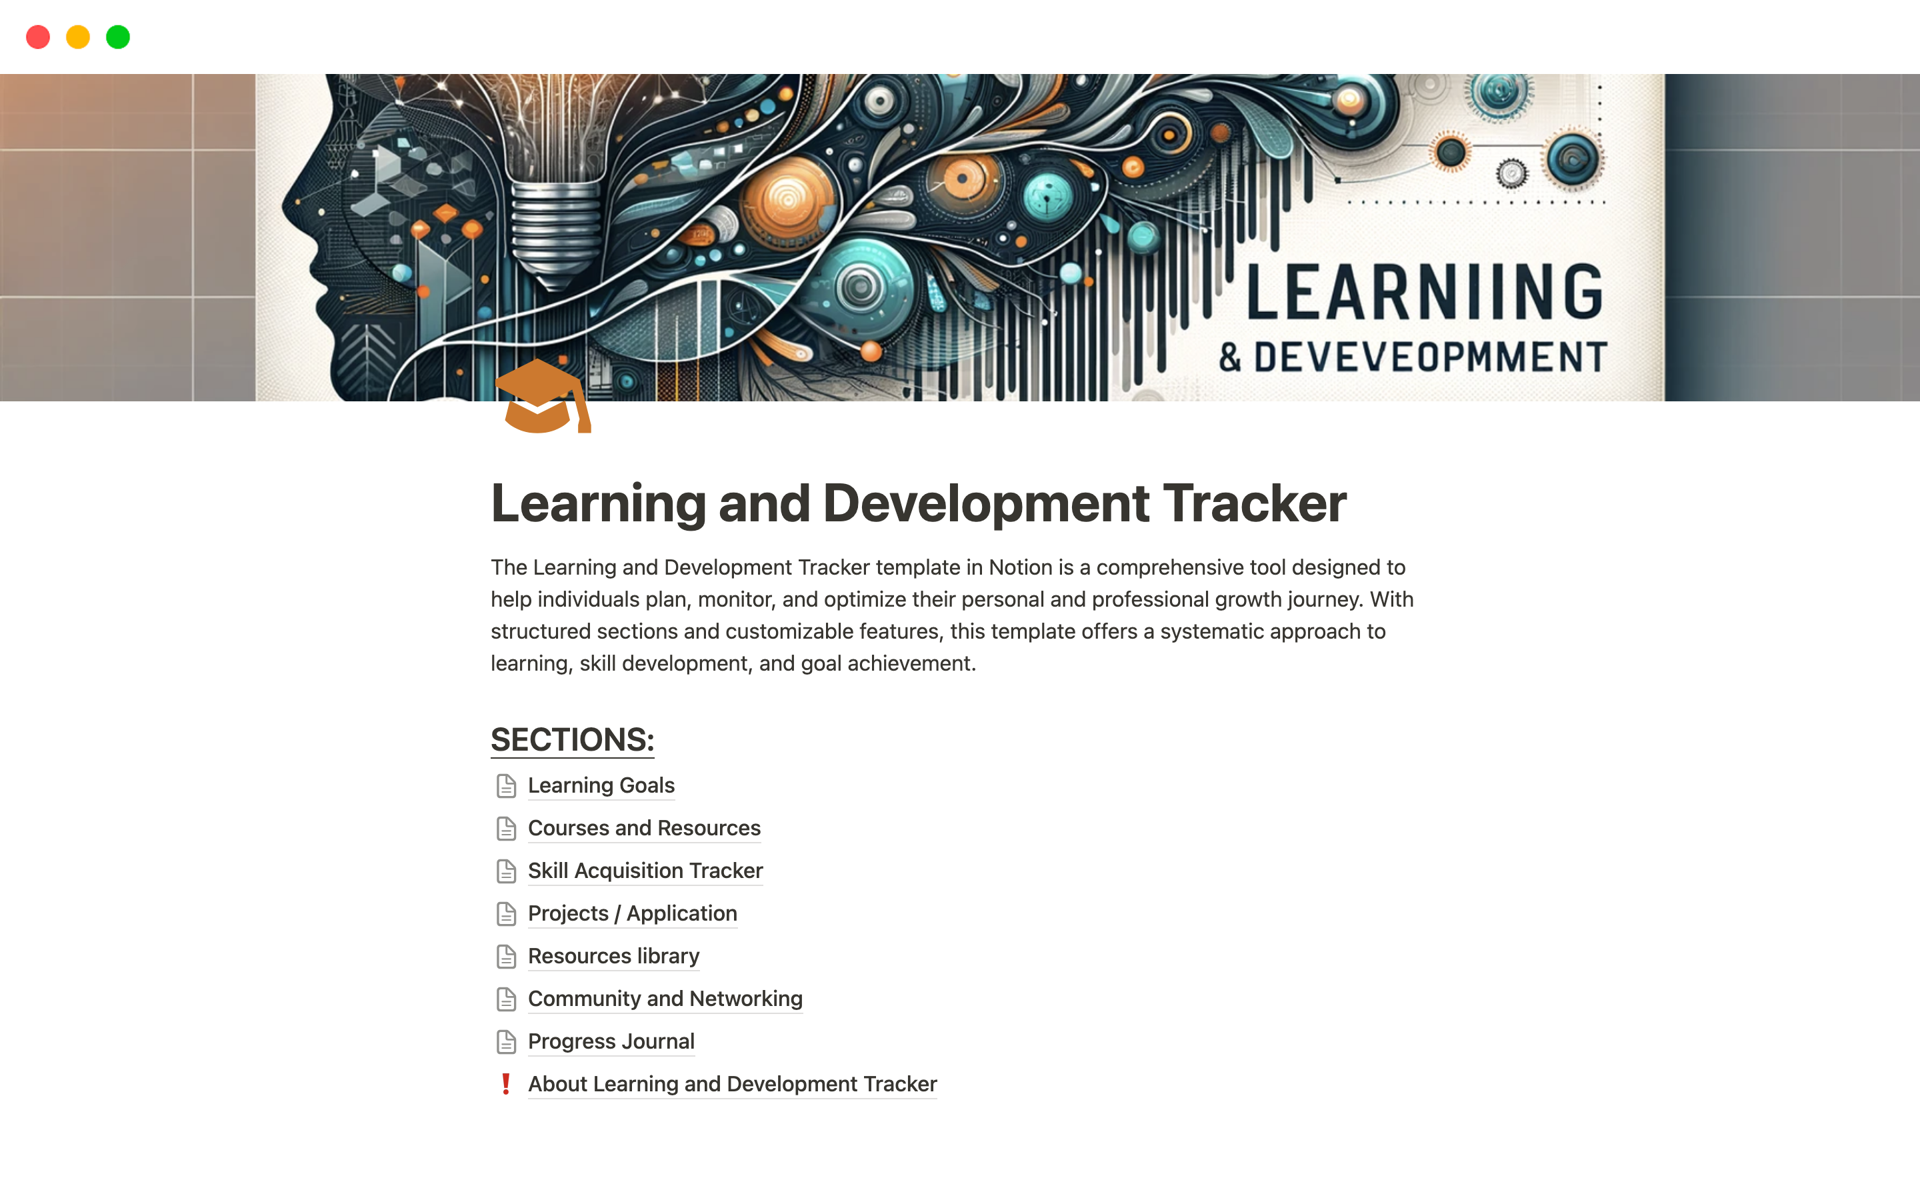 Vista previa de plantilla para Learning and Development Tracker